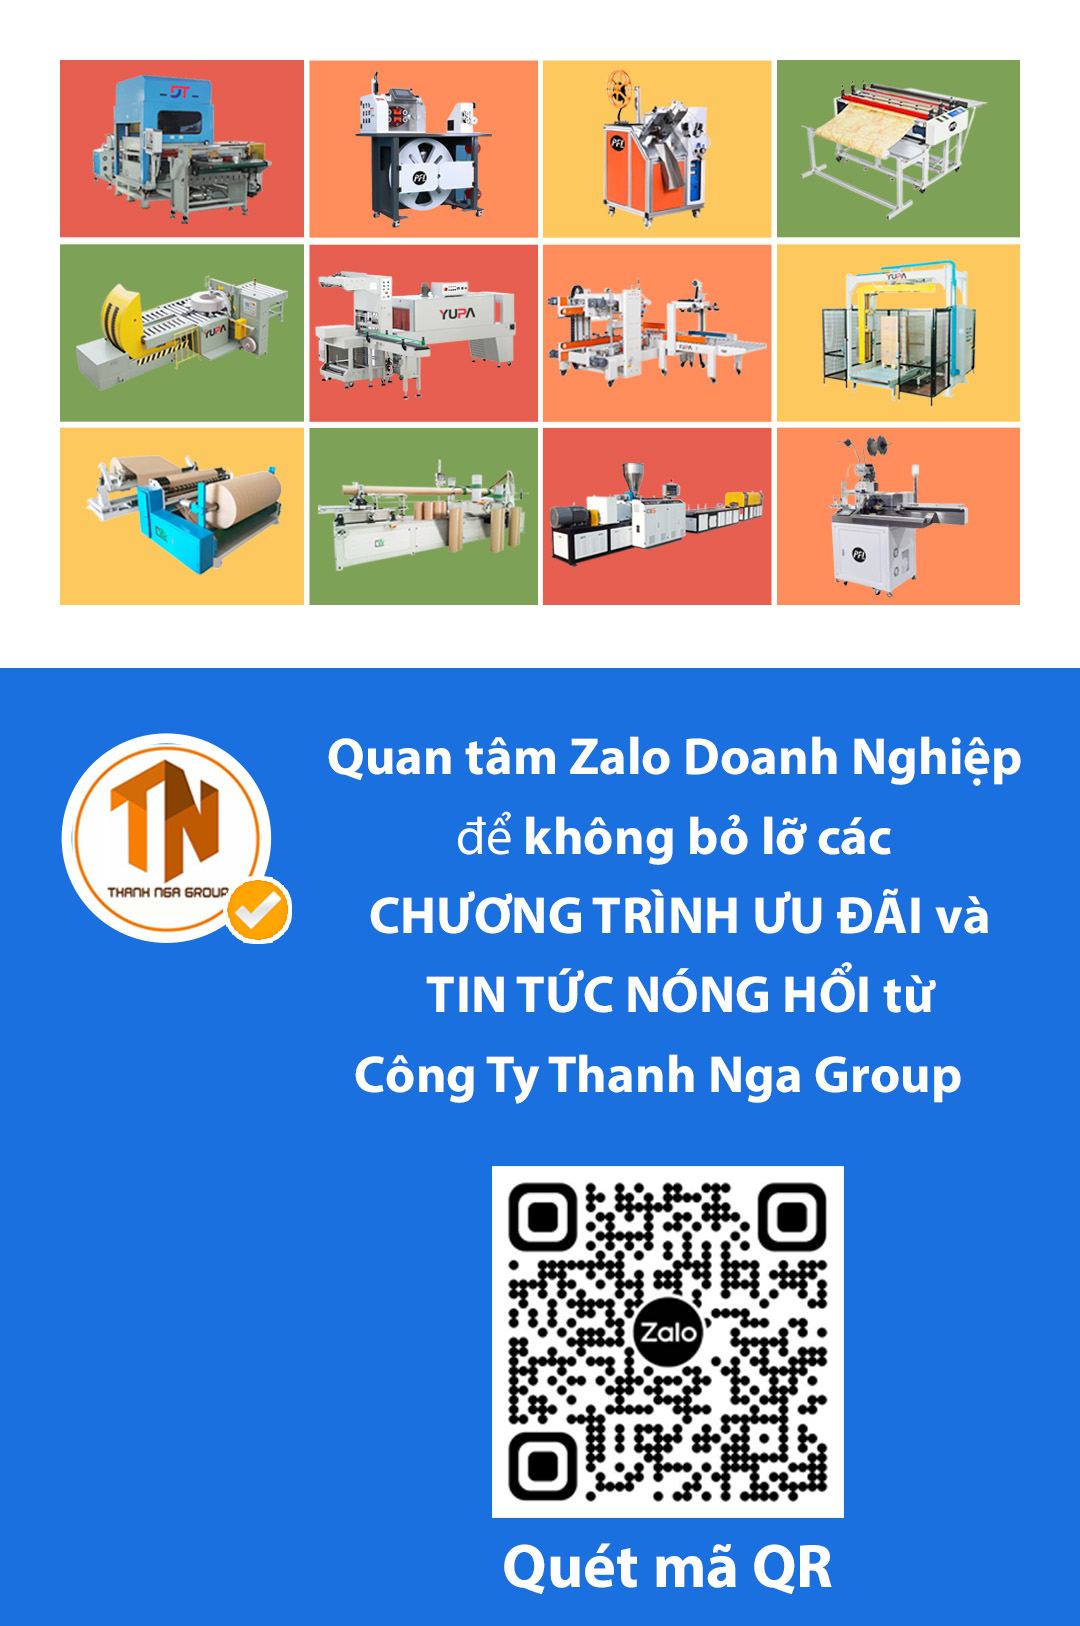 zalo OA doanh nghiệp Thanh Nga Group